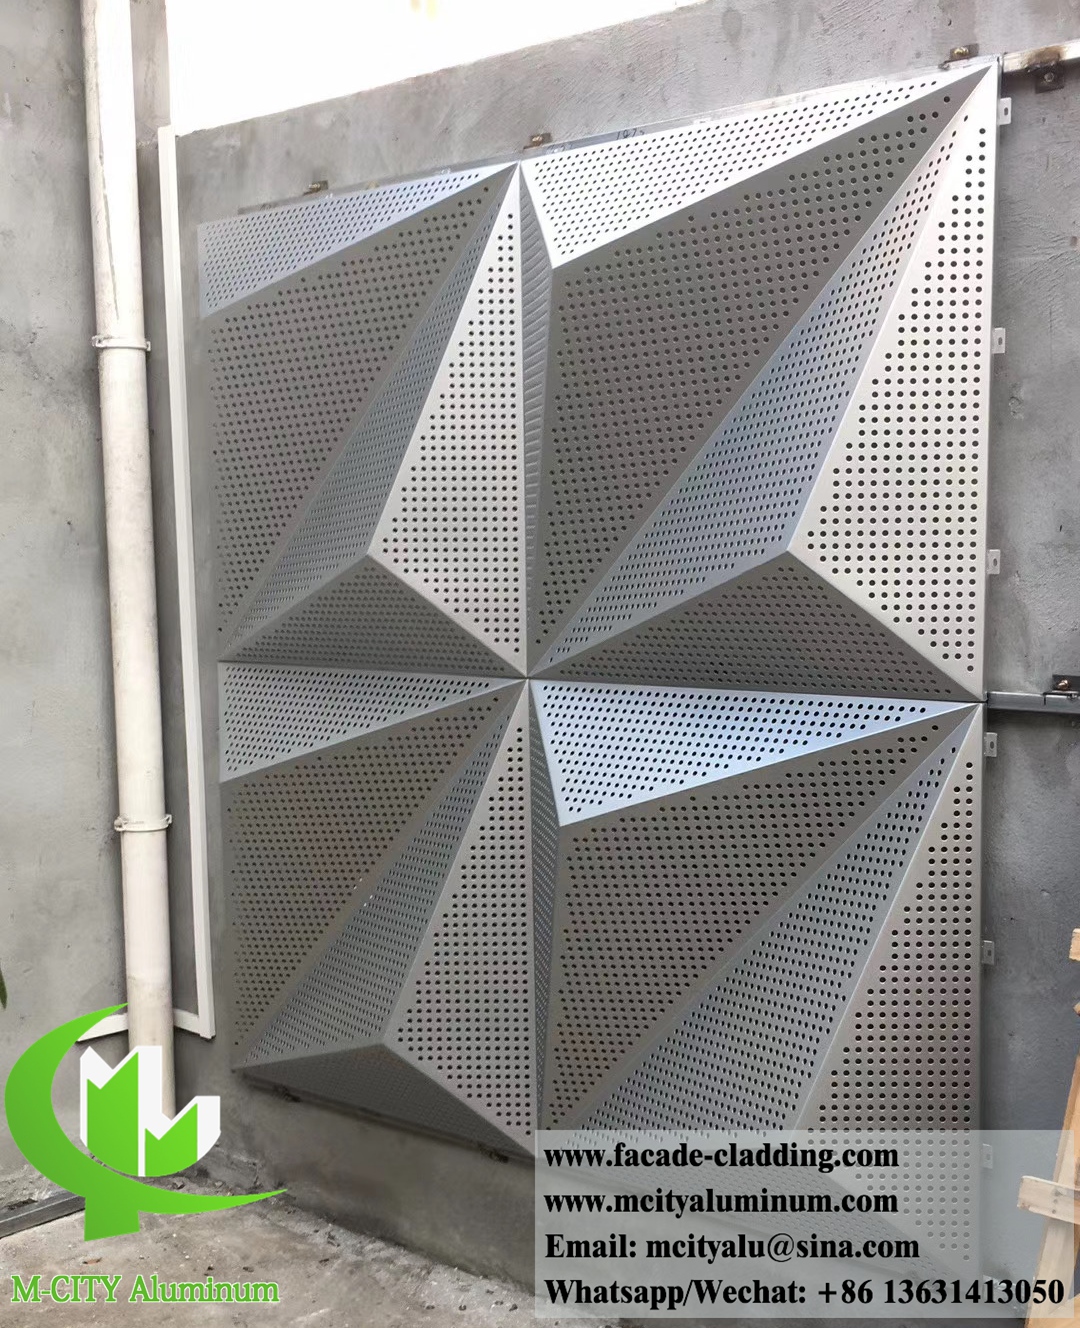 Perforation metal screen 3D aluminium facade cladding panel for building